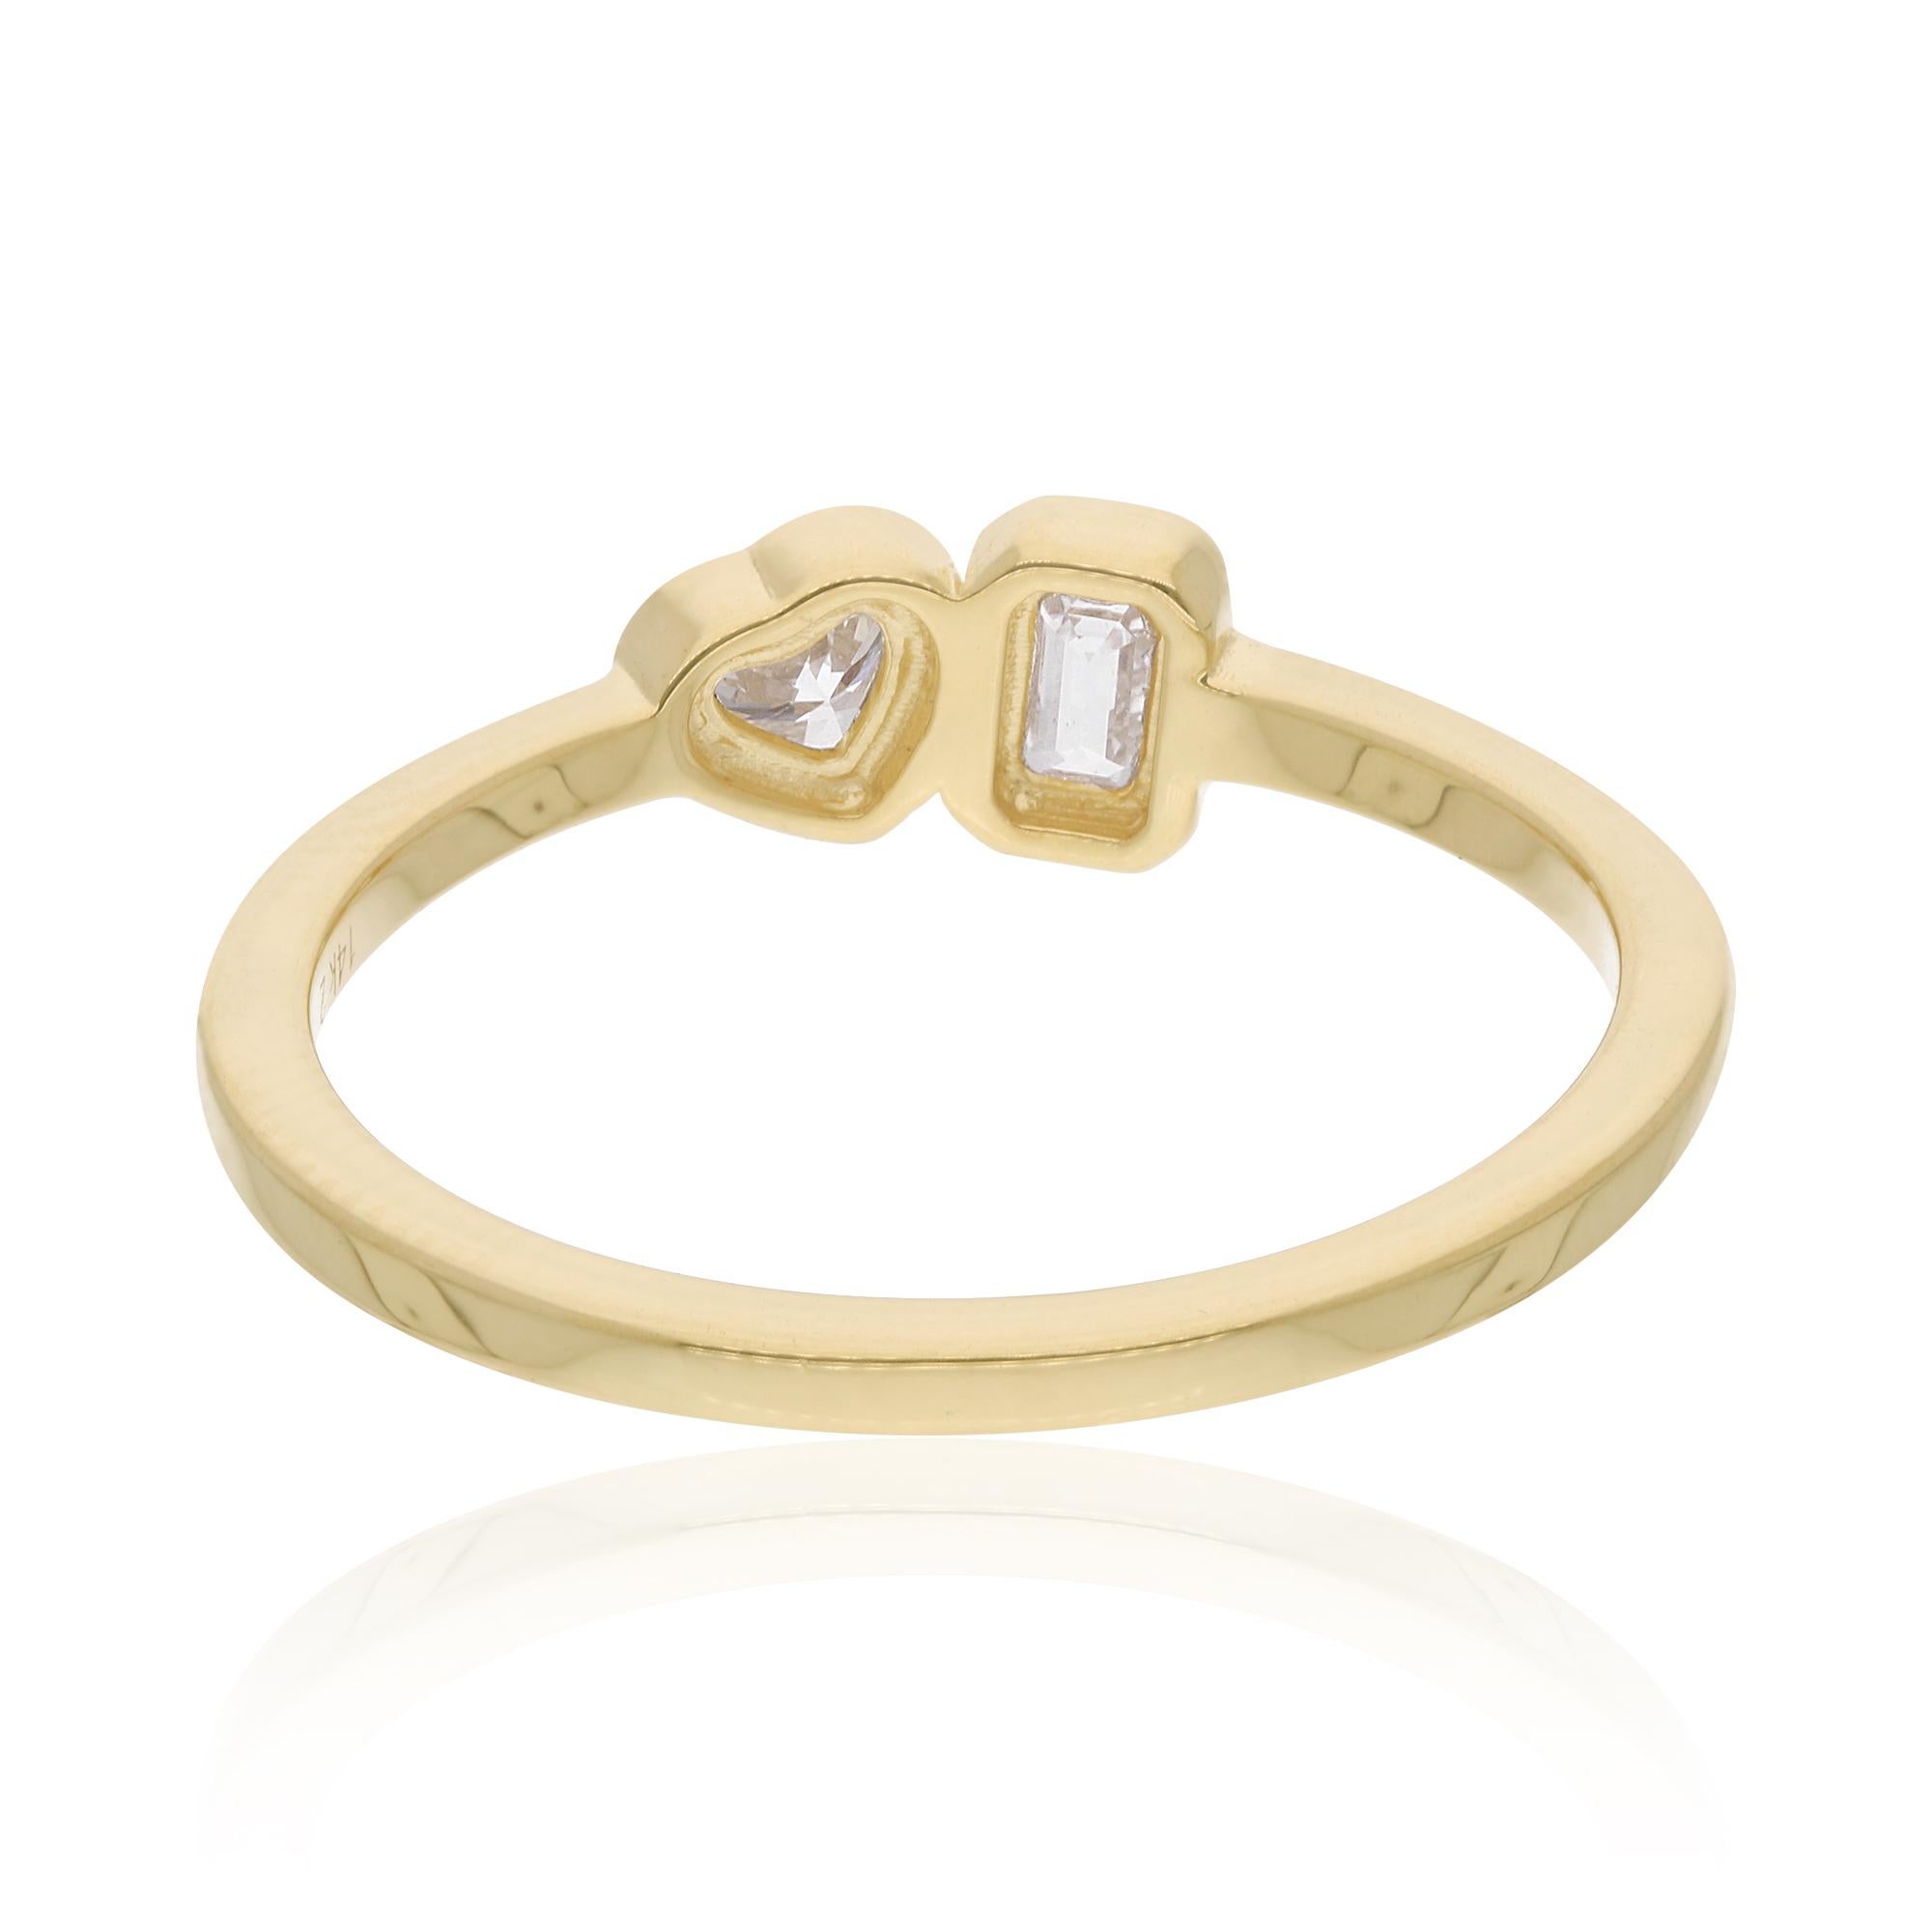 0.54 Carat Heart & Emerald Cut Diamond Ring 14 Karat Yellow Gold Fine Jewelry For Sale 1